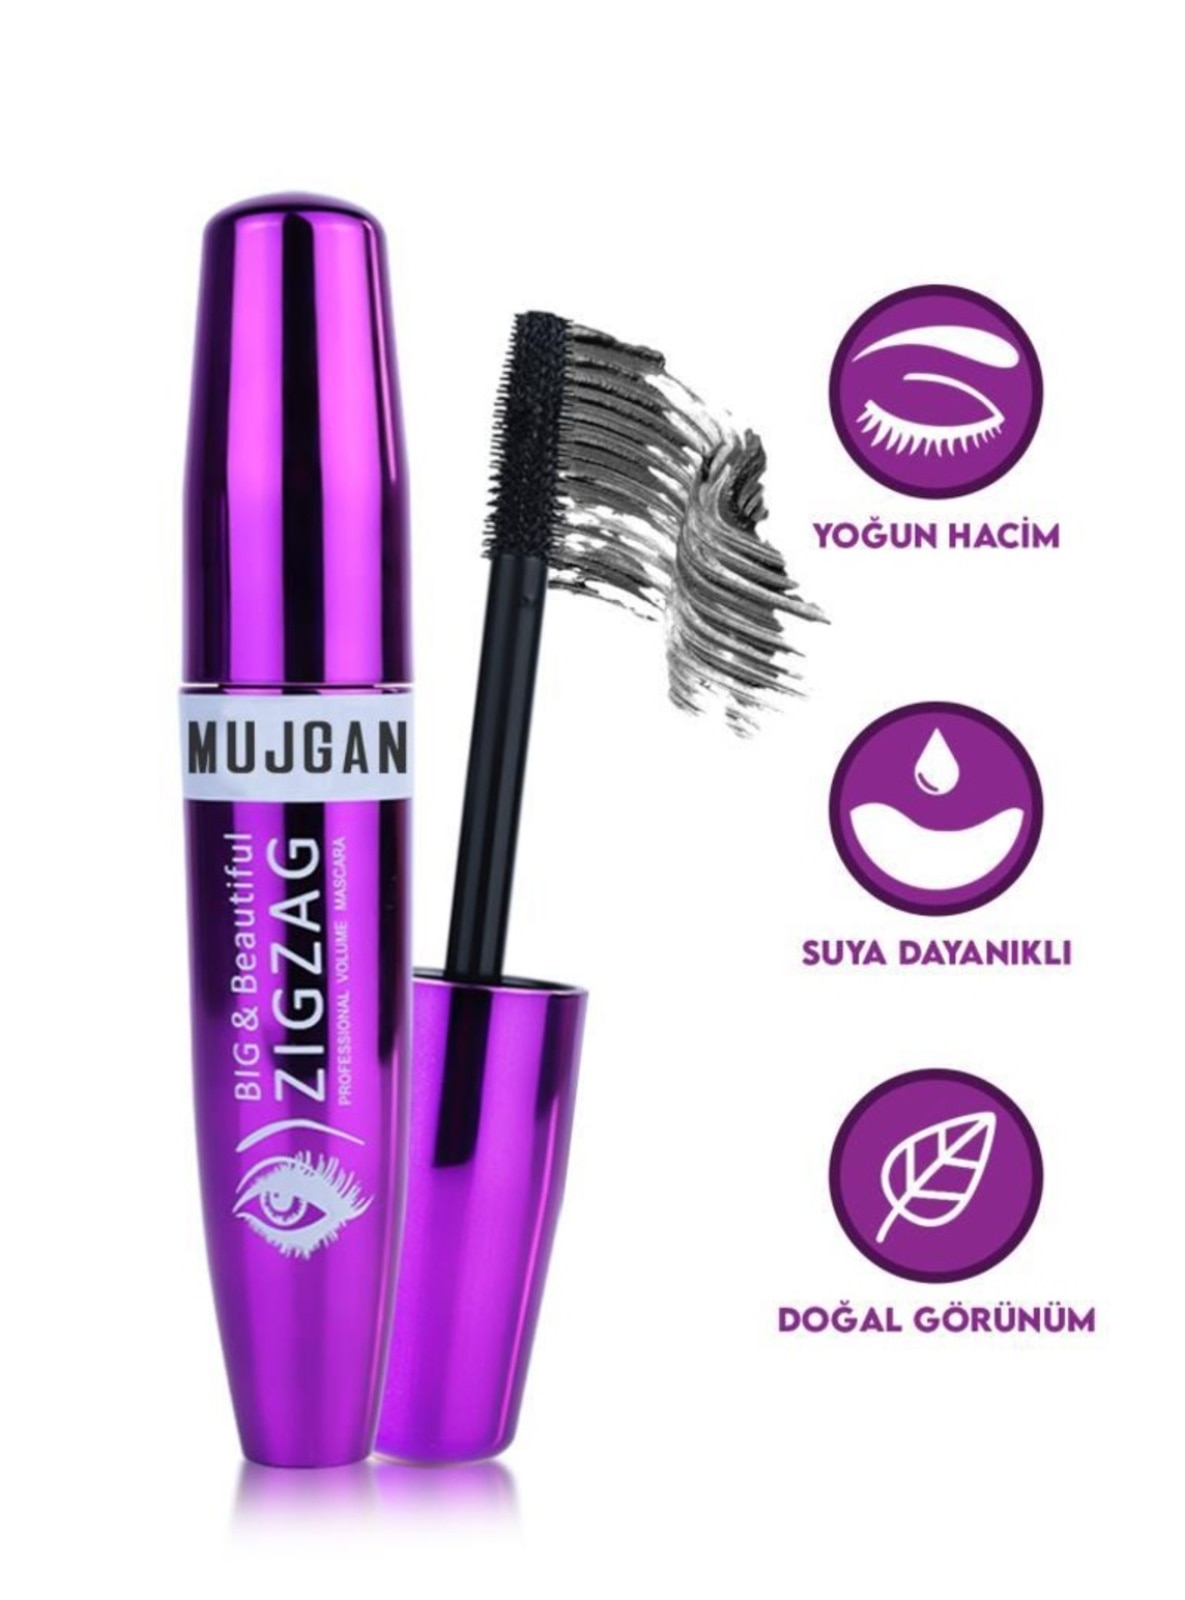 Big Beautiful Zigzag Volume Mascara İn Purple Packaging